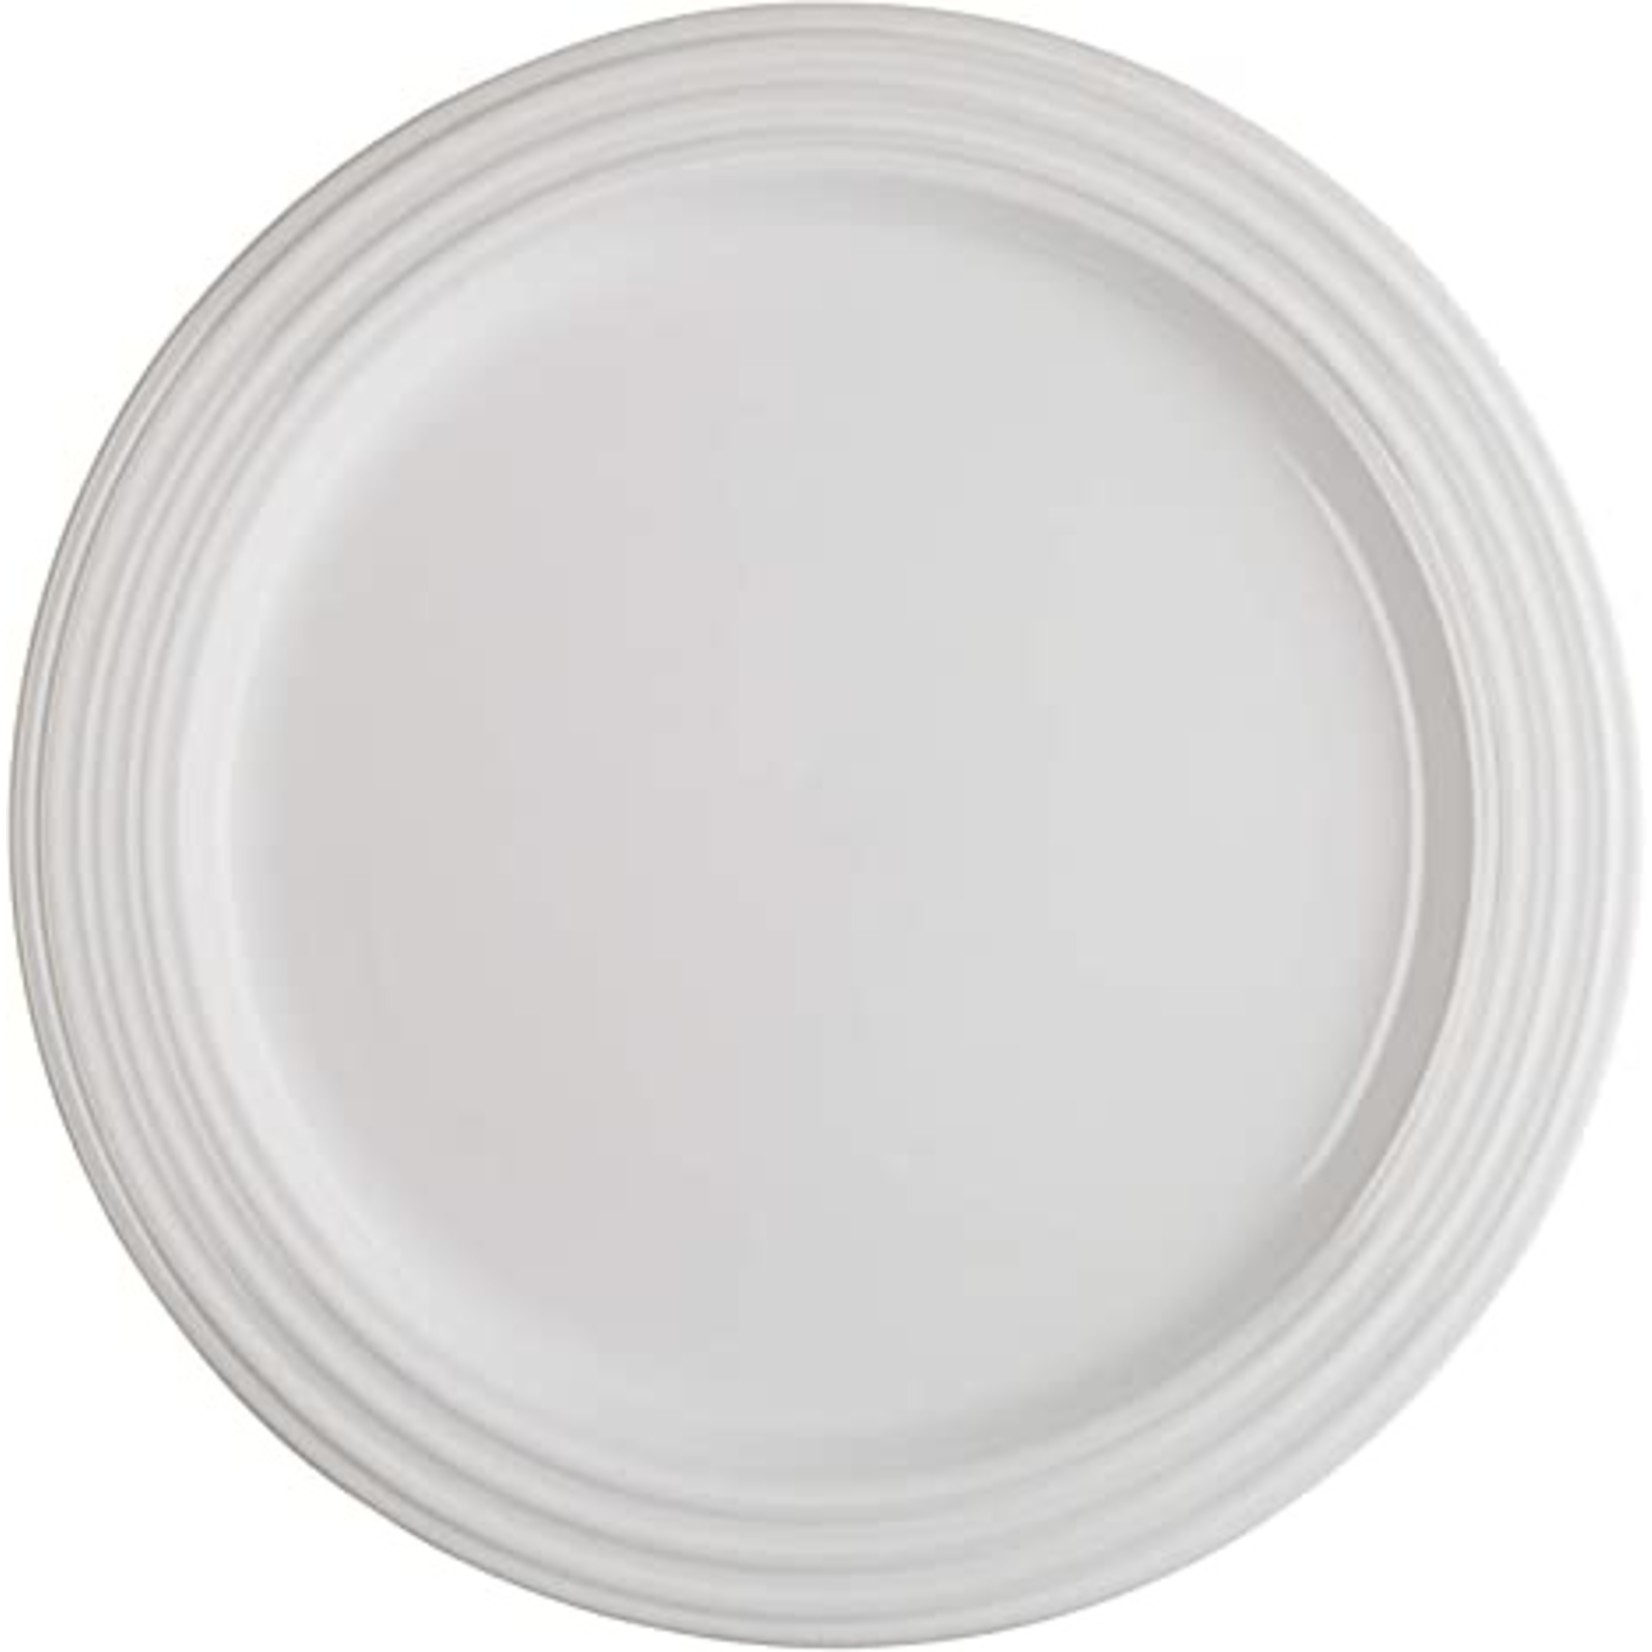 Le Creuset Le Creuset Dinner Plate, White, 10.5"